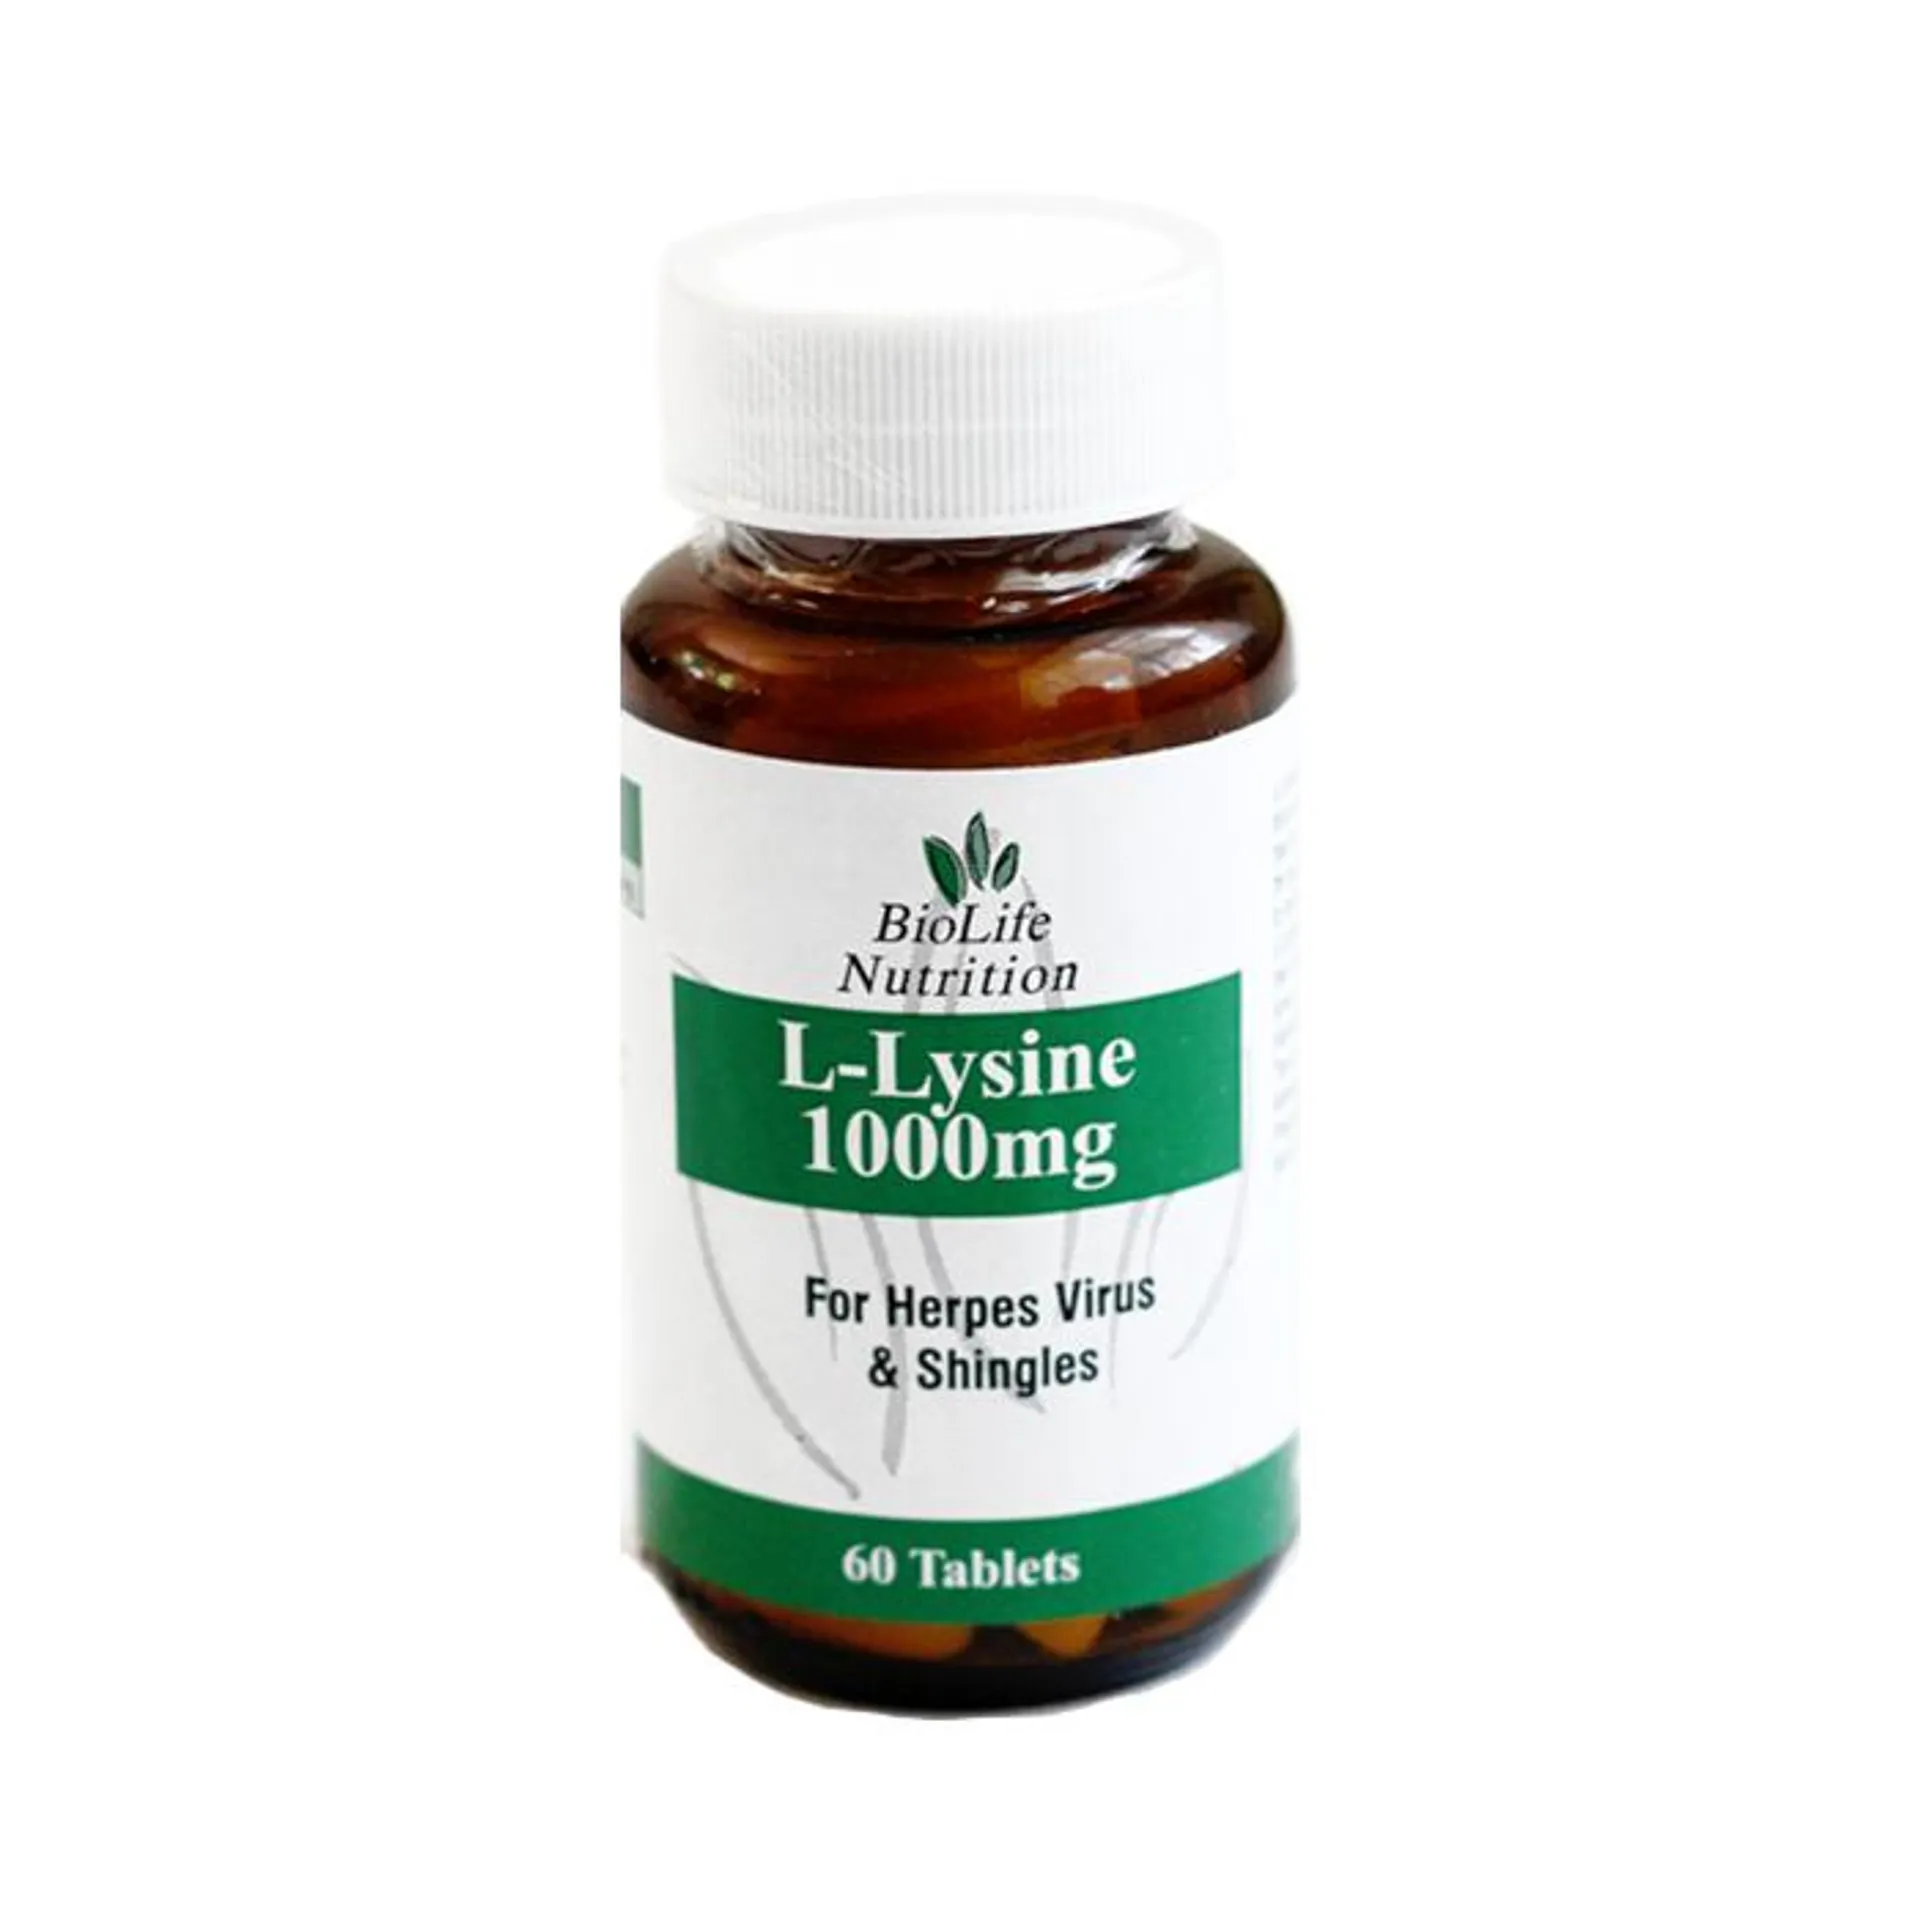 Biolife - L-Lysine 1000mg 60s